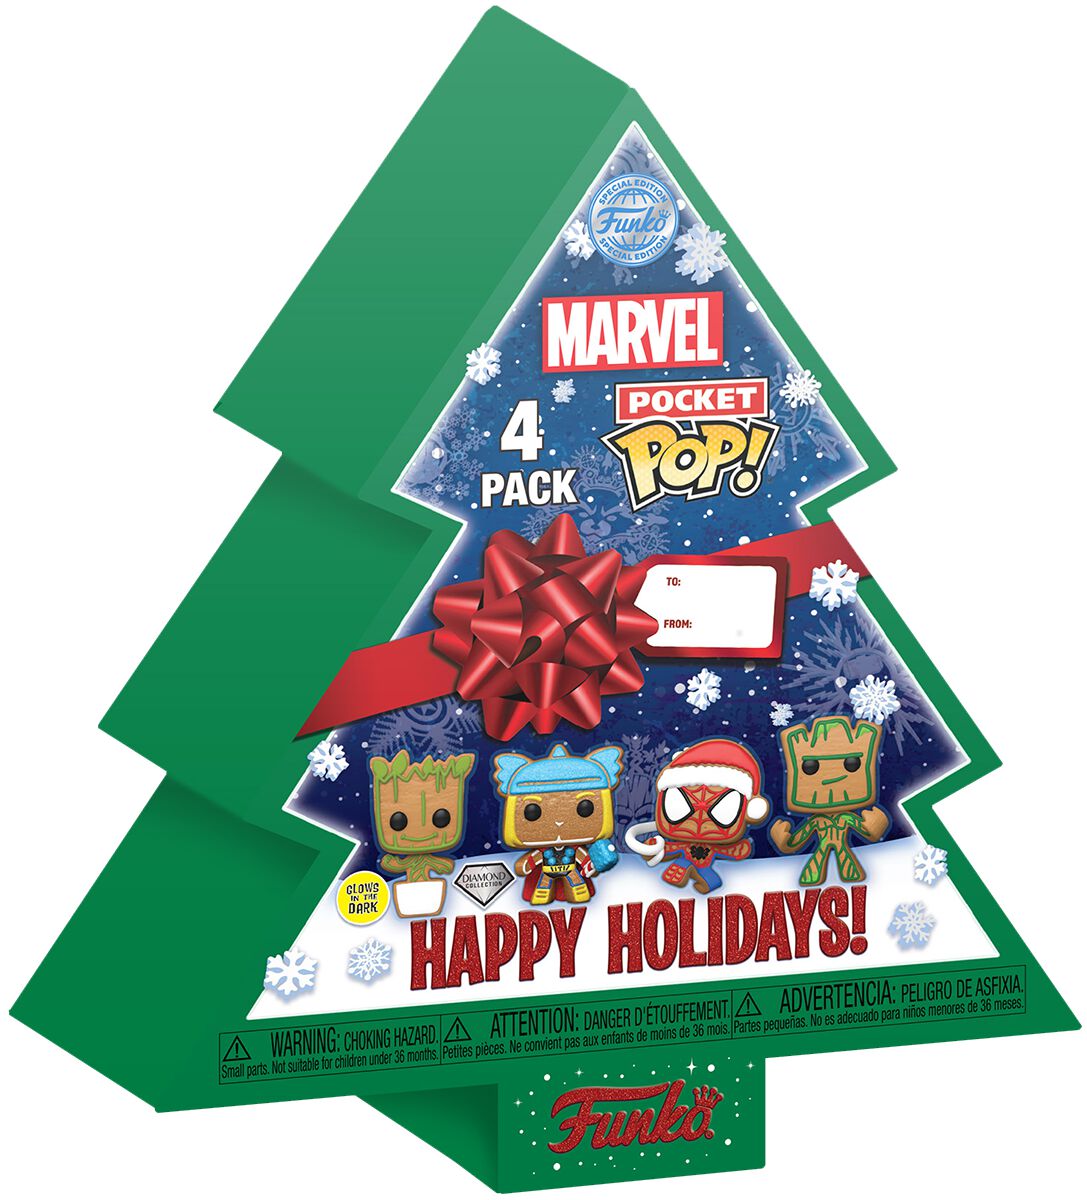 Porte-Clefs Pocket Pop! de Marvel - Gingerbread Tree Holiday Box - POP! Keychain 4-Pack (Glow in the